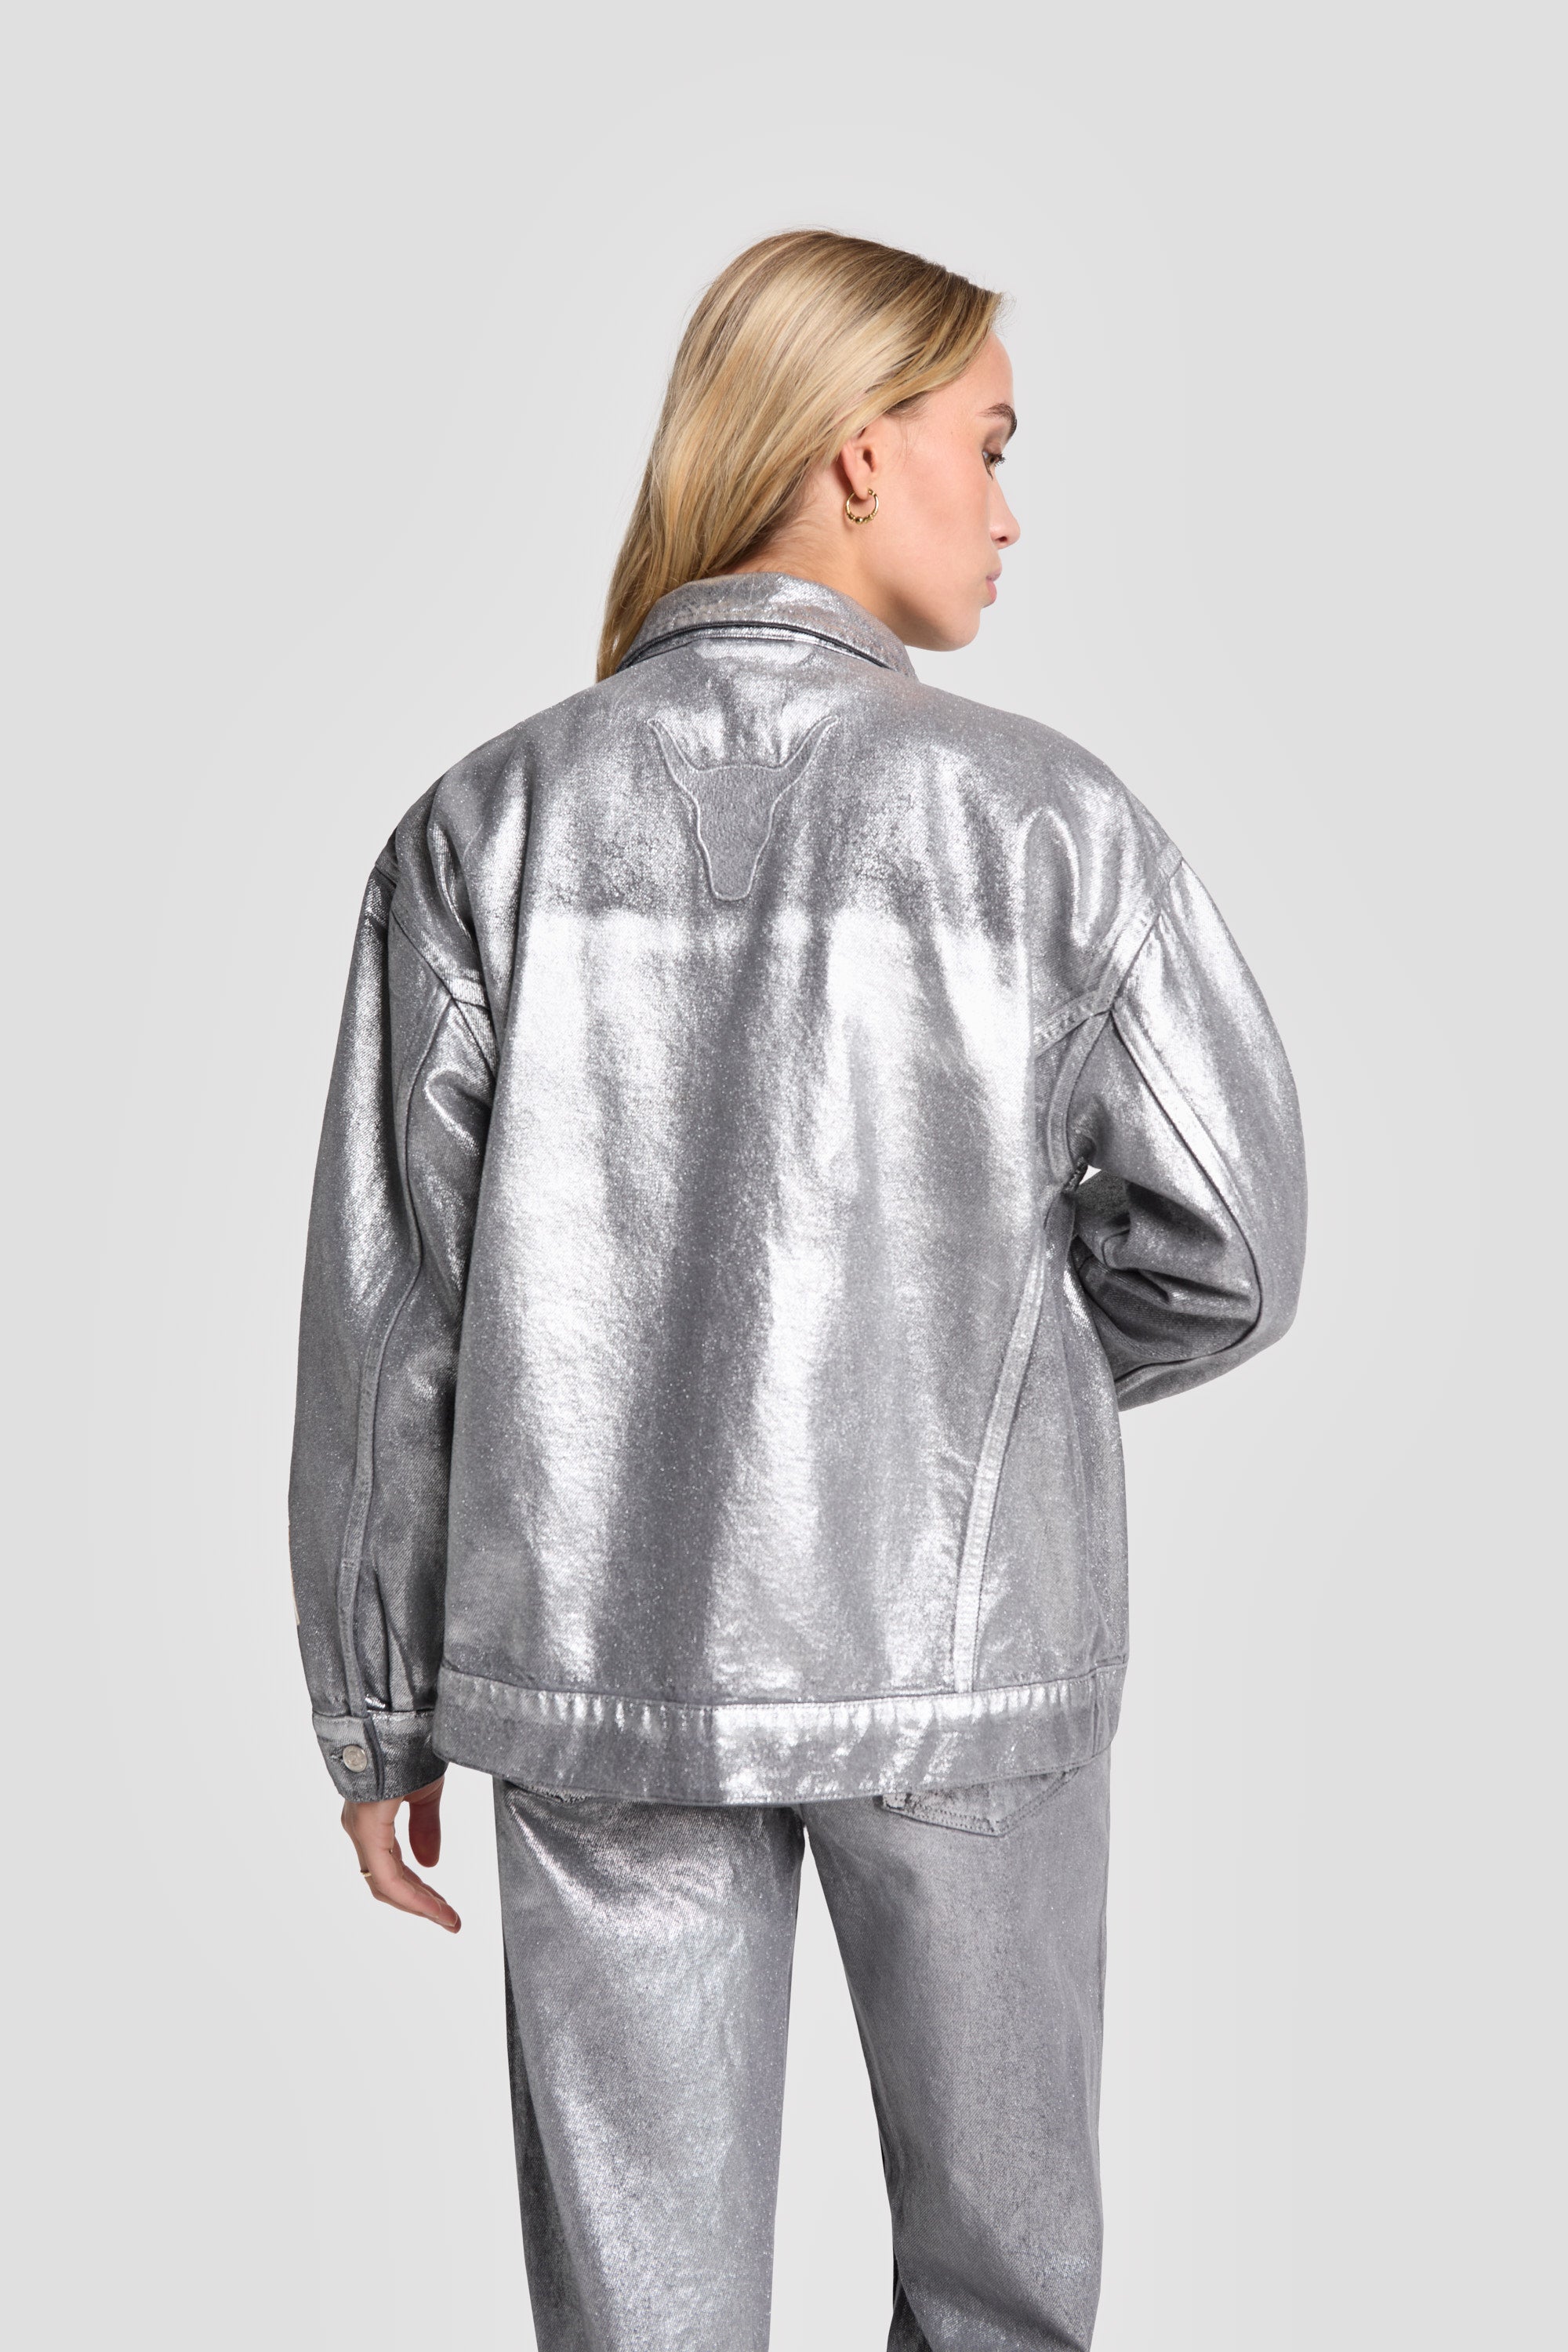 Silver denim jacket